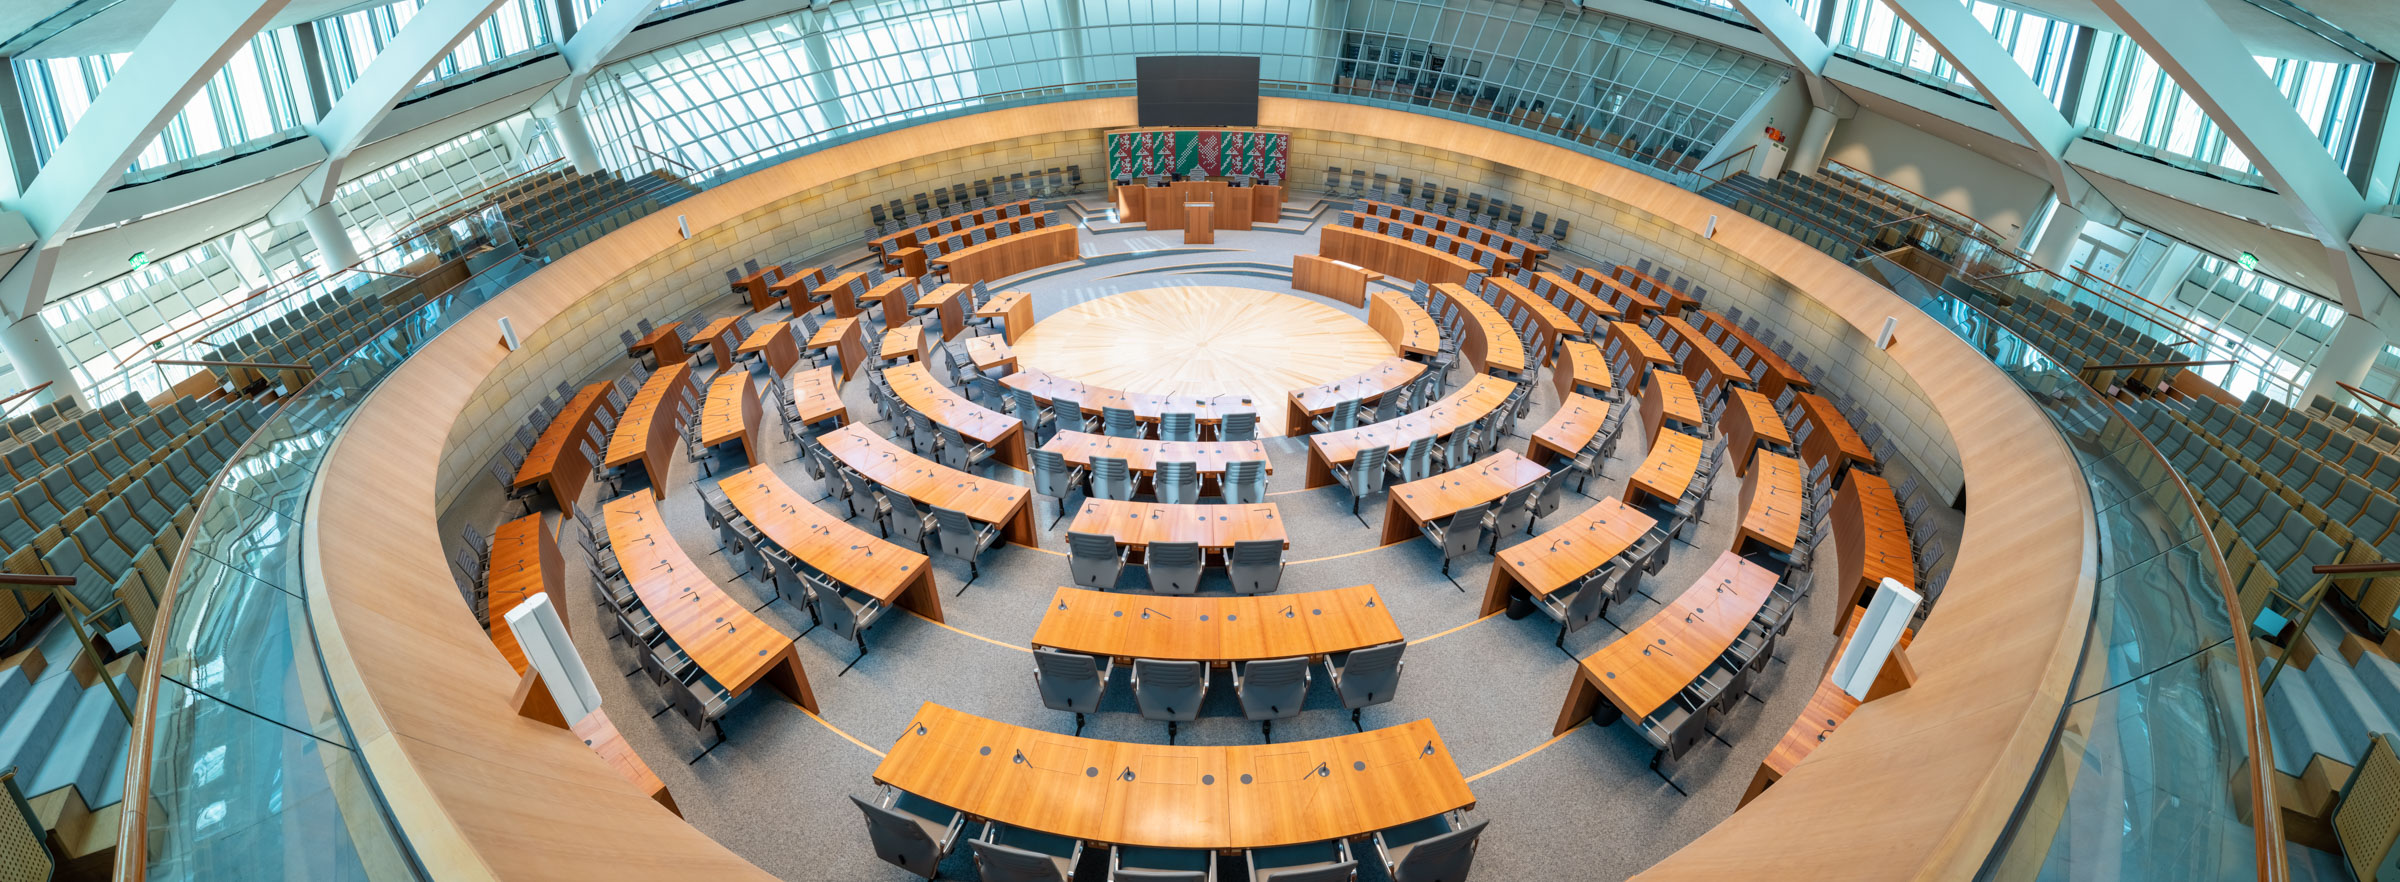 Plenarsaal Landtag NRW 195°-Panorama #220802-9395